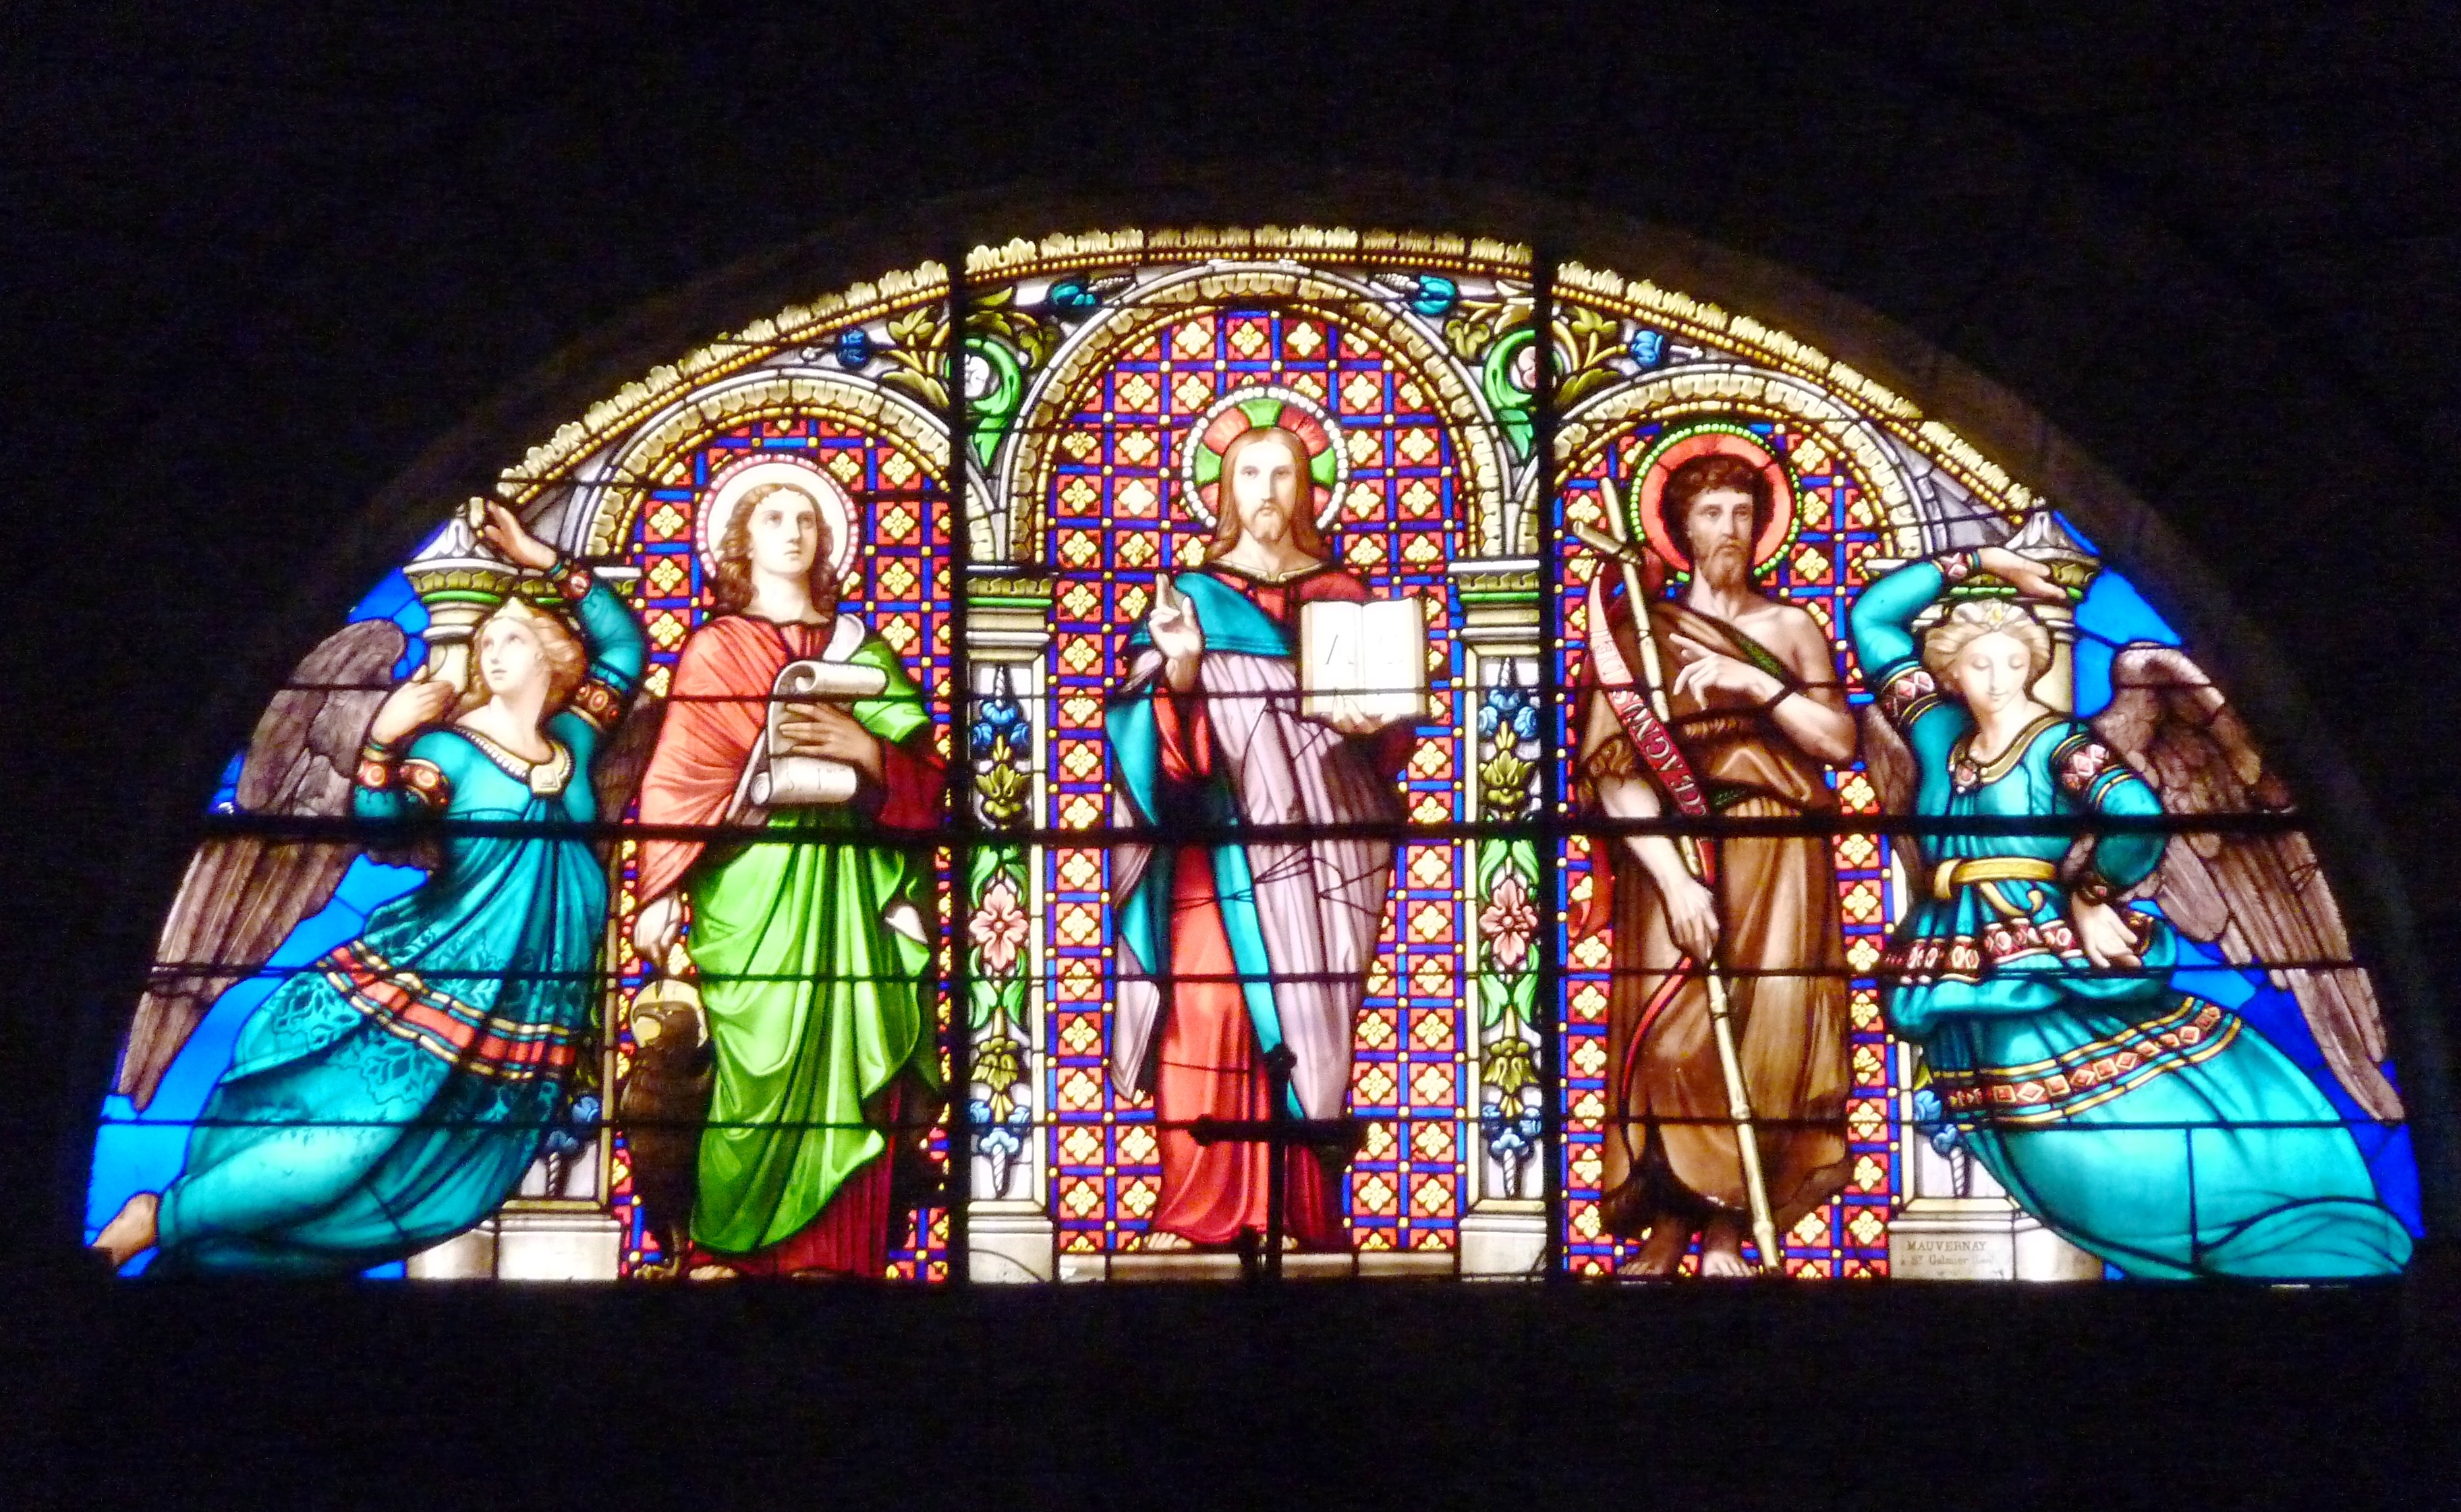 File:Pezenas Church Window.JPG - Wikimedia Commons